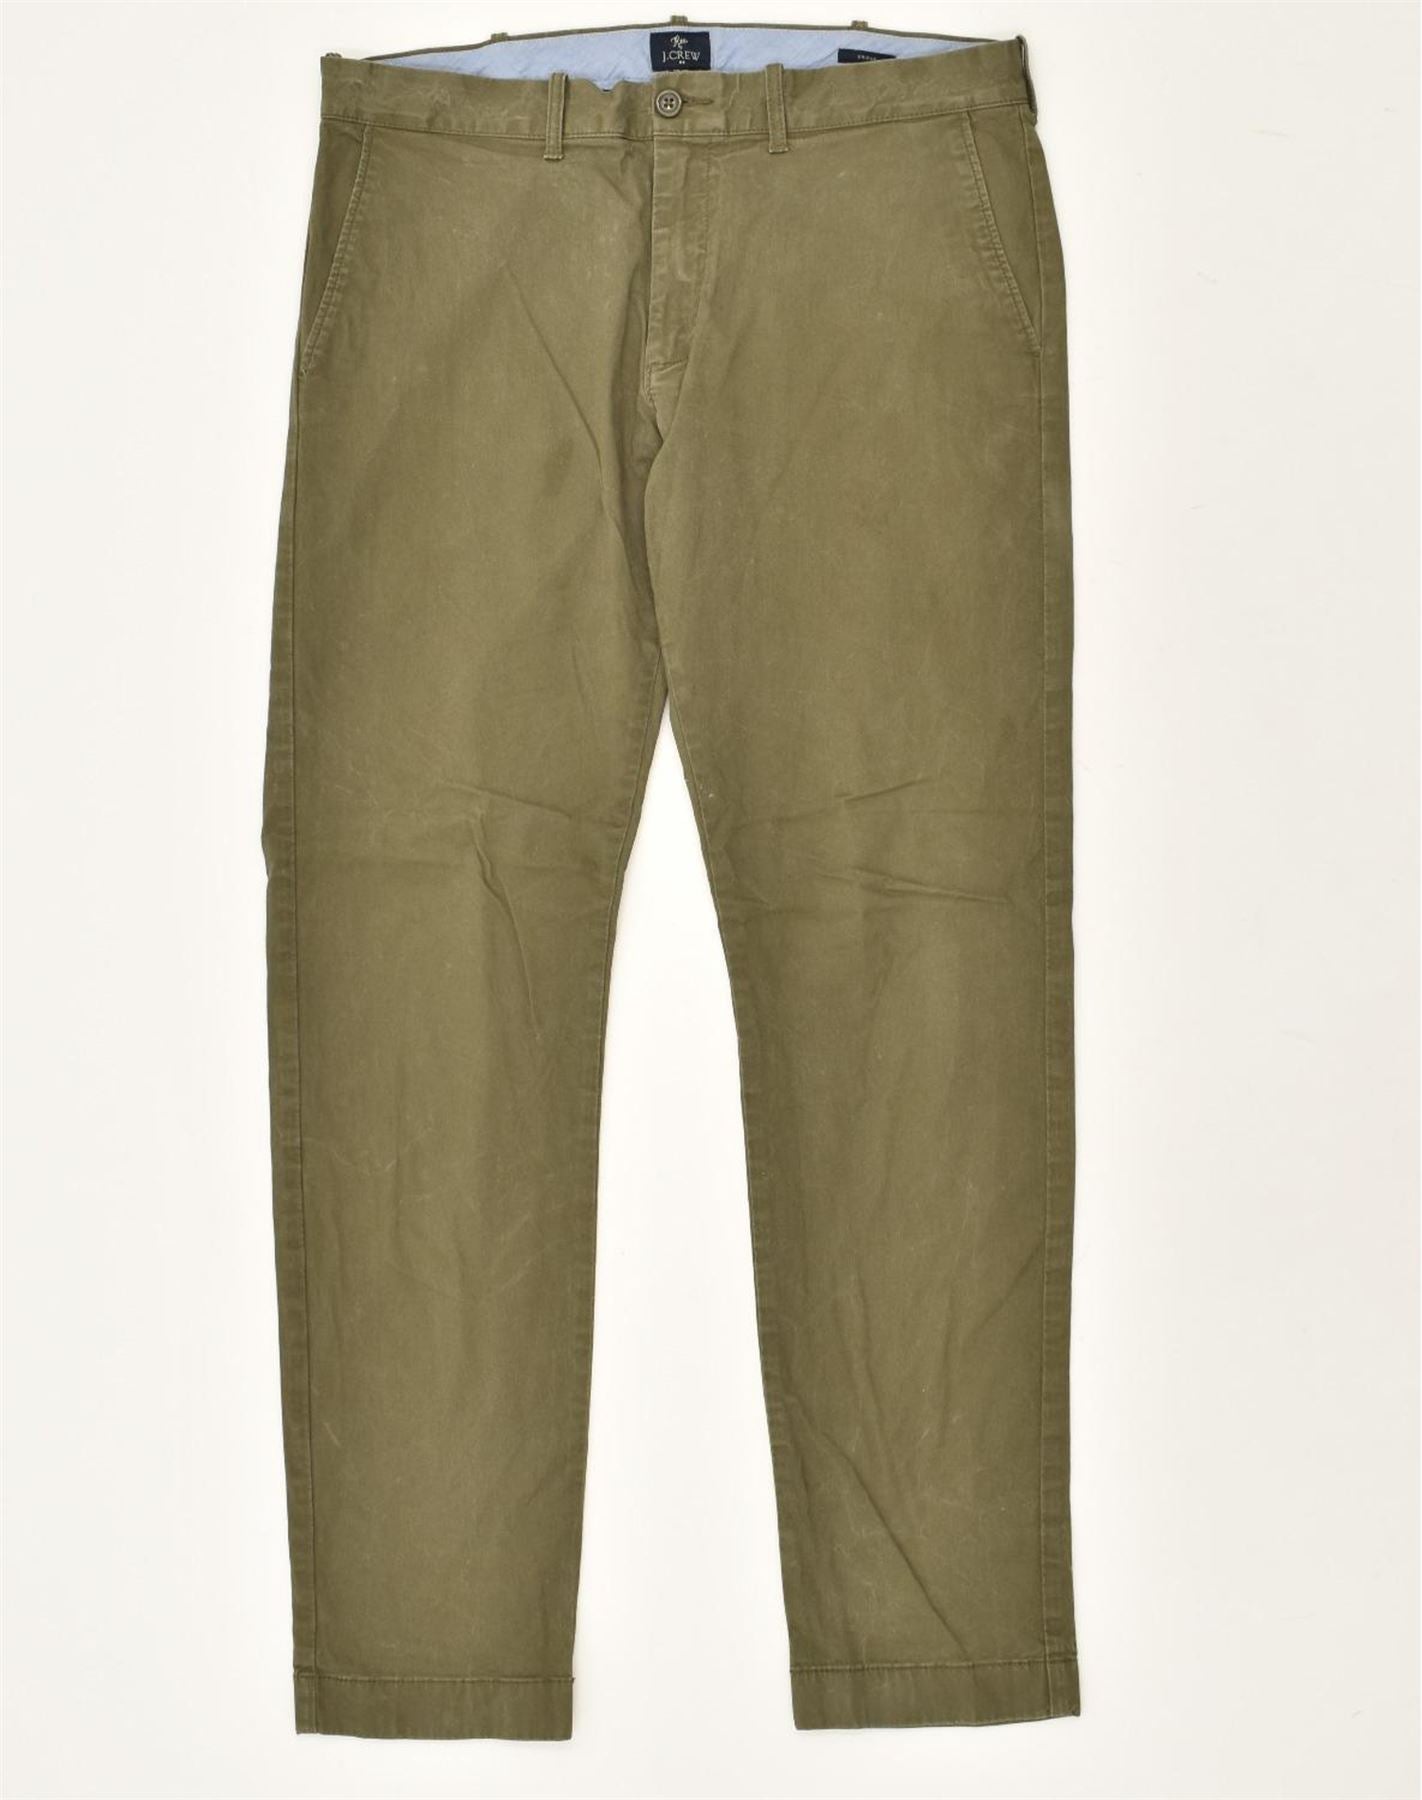 J.Crew Ludlow Suit Pant in Carpini® Italian Cotton Oxford | 32/30 | Navy |  $188 | eBay